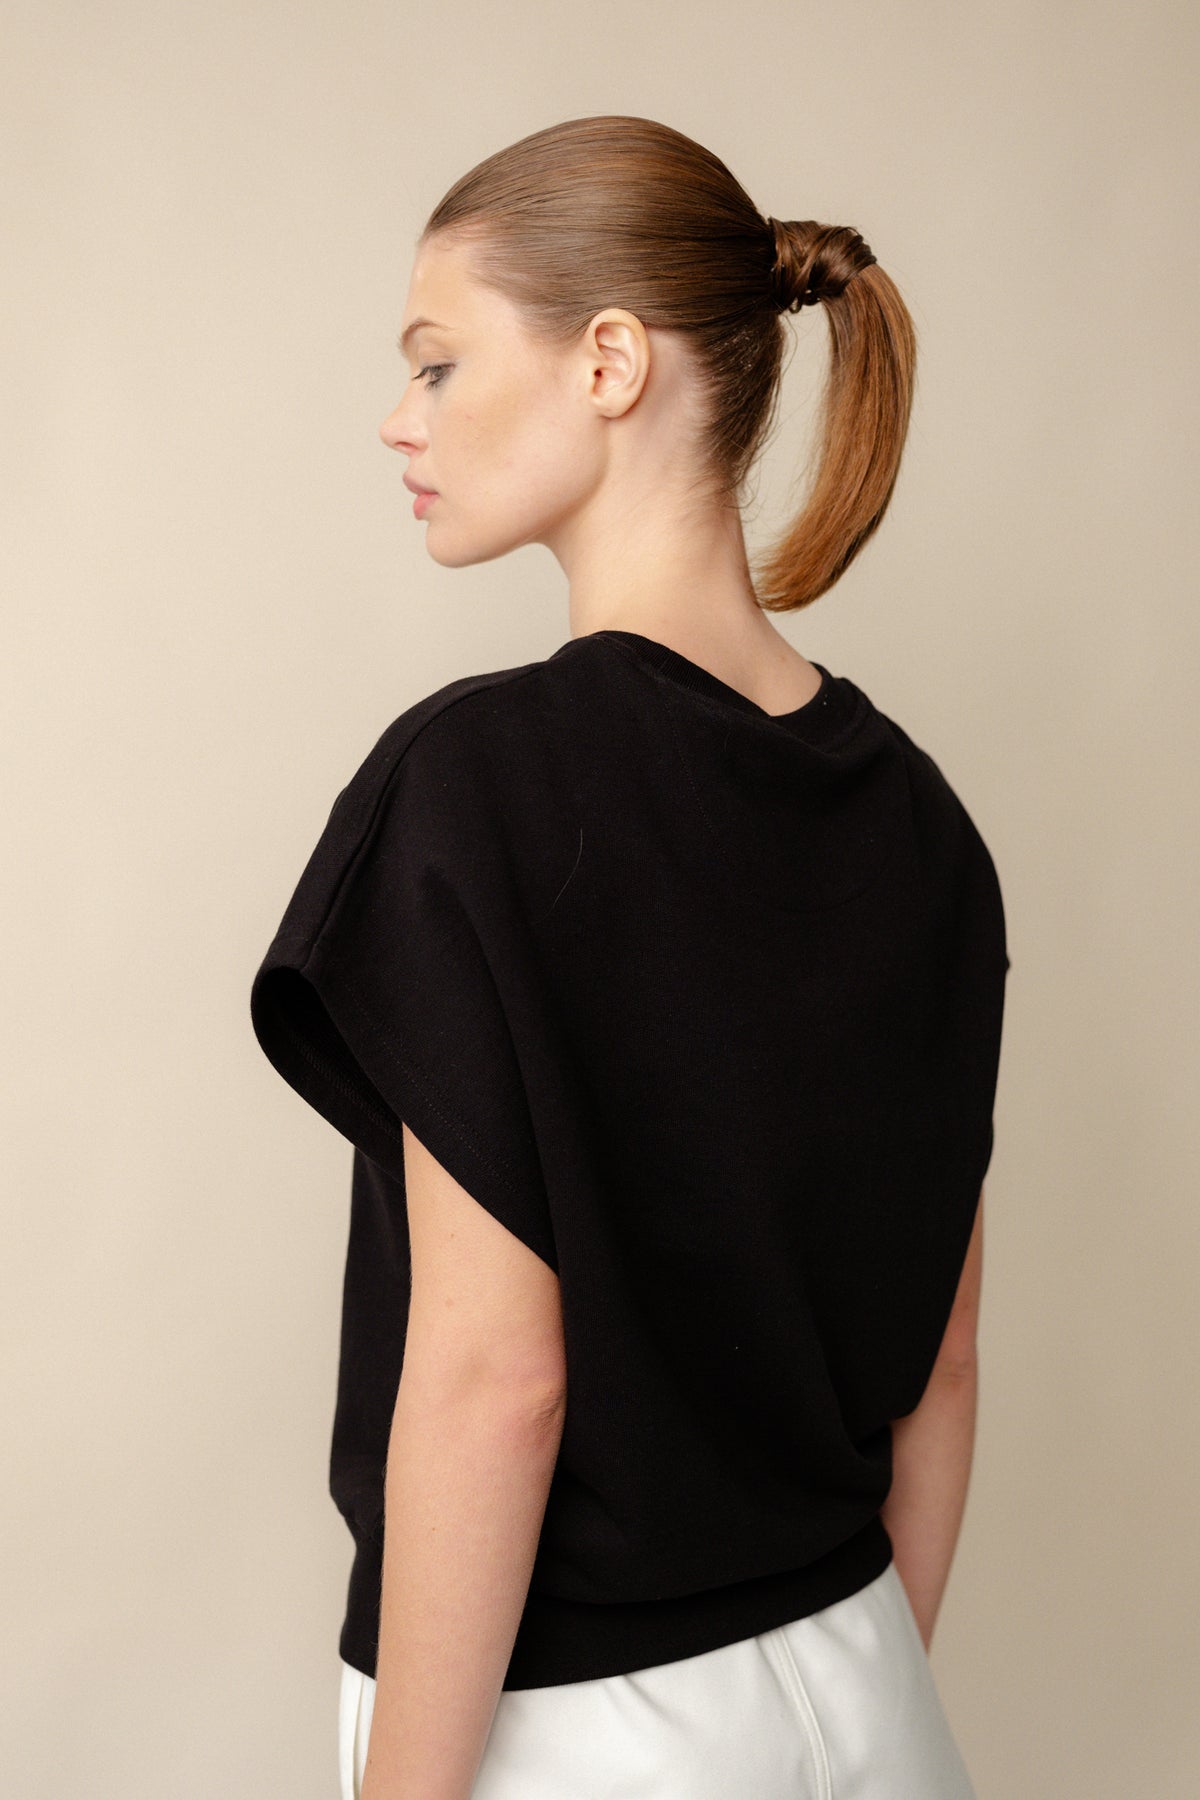 
            Hip up image from behind of white, brunette female wearing sleeveless sweatshirt plastic free in black.